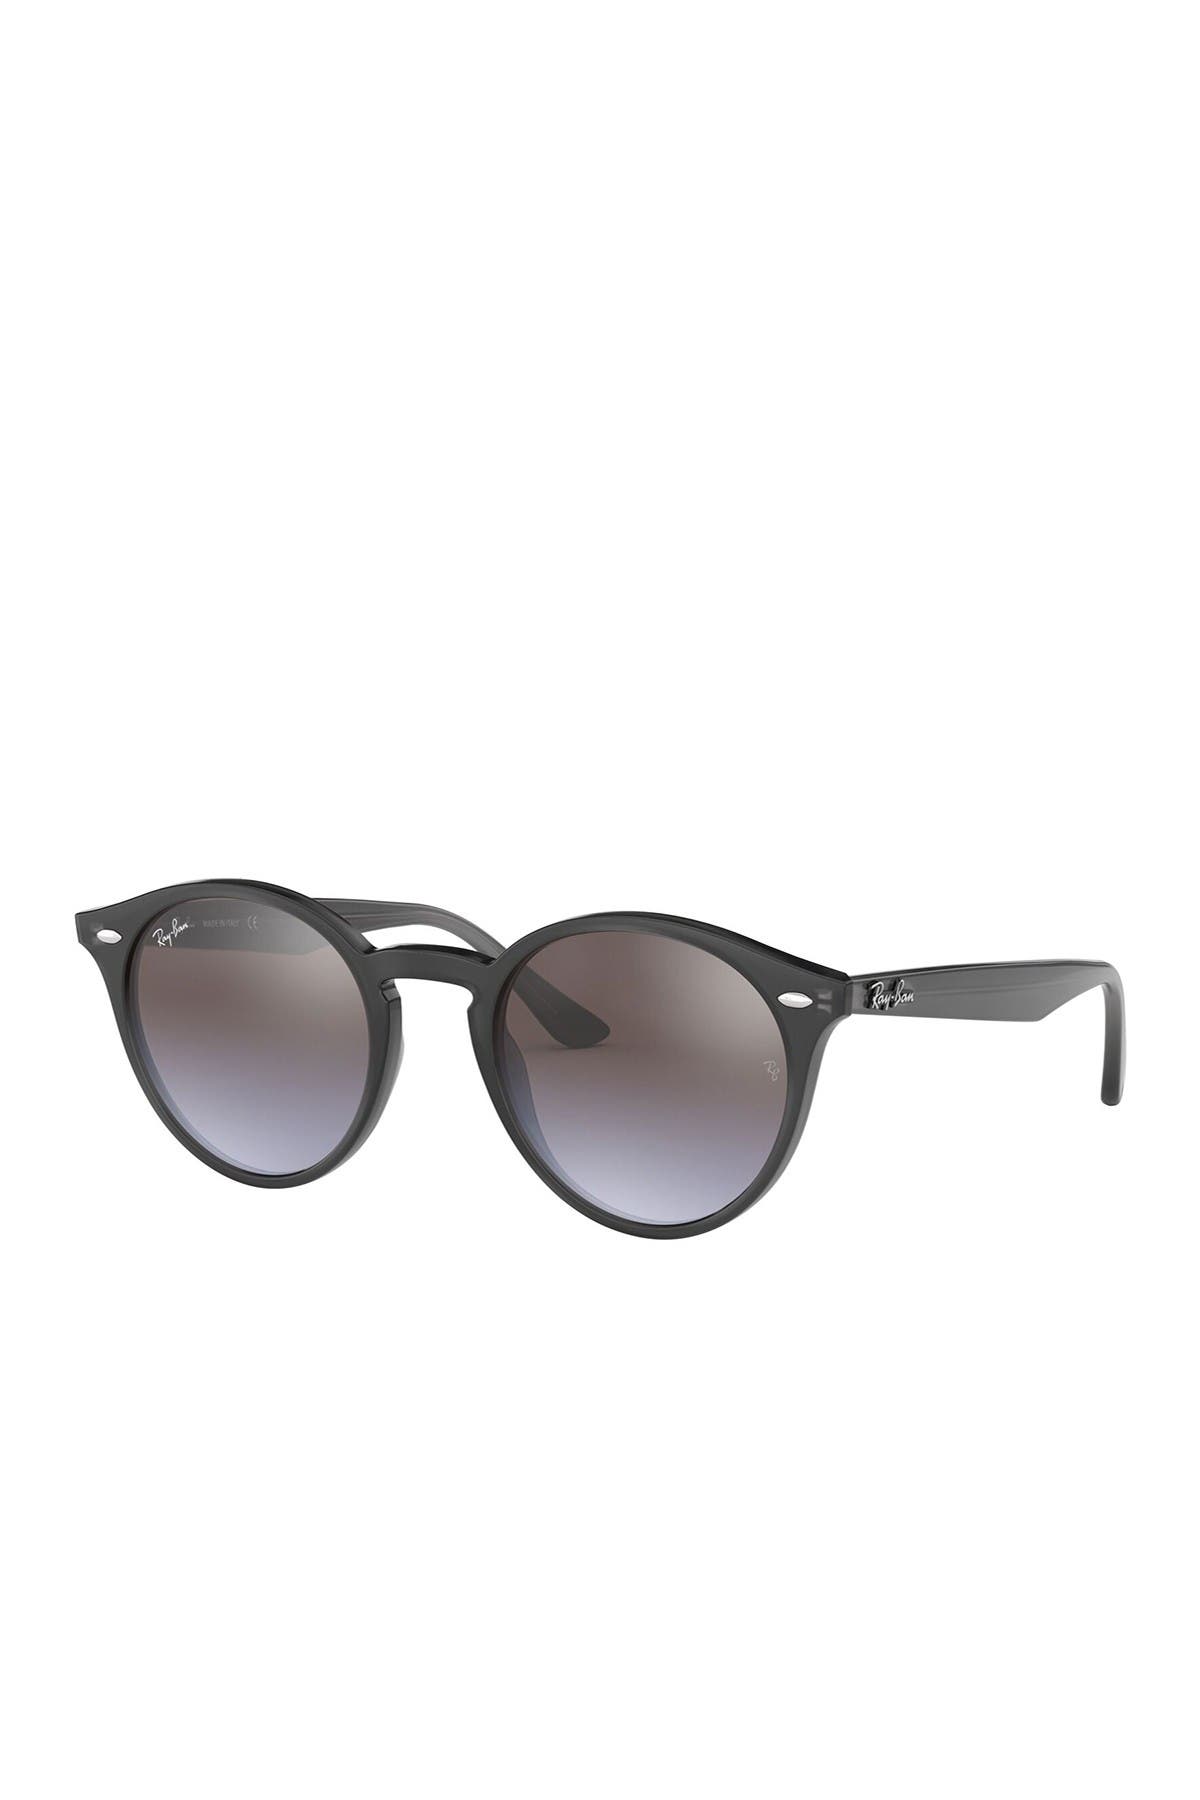 ray ban highstreet 49mm round sunglasses